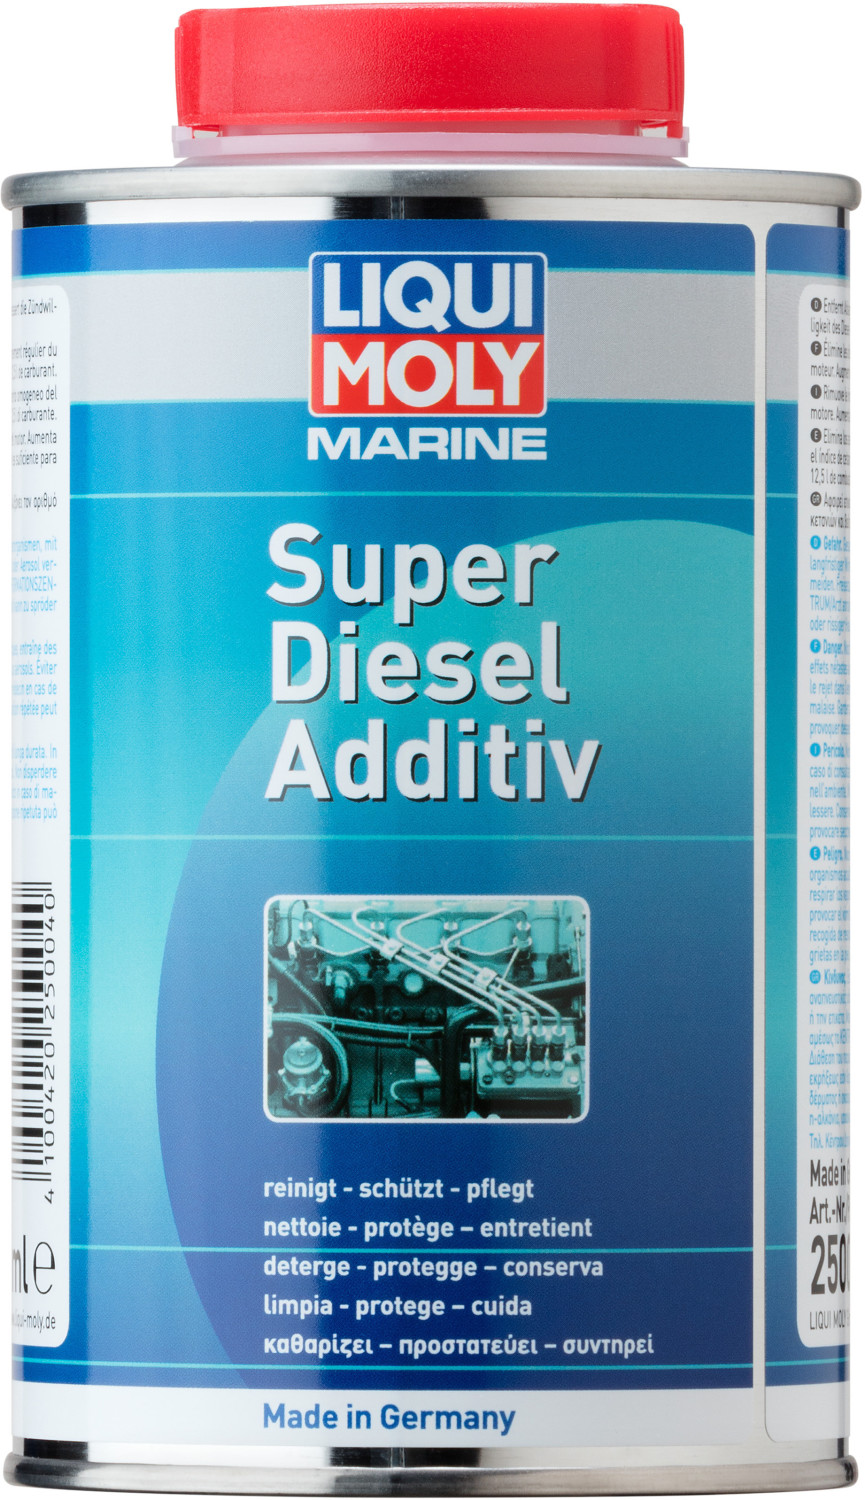 LIQUI MOLY Marine Super Diesel Additiv ab 12,10 €